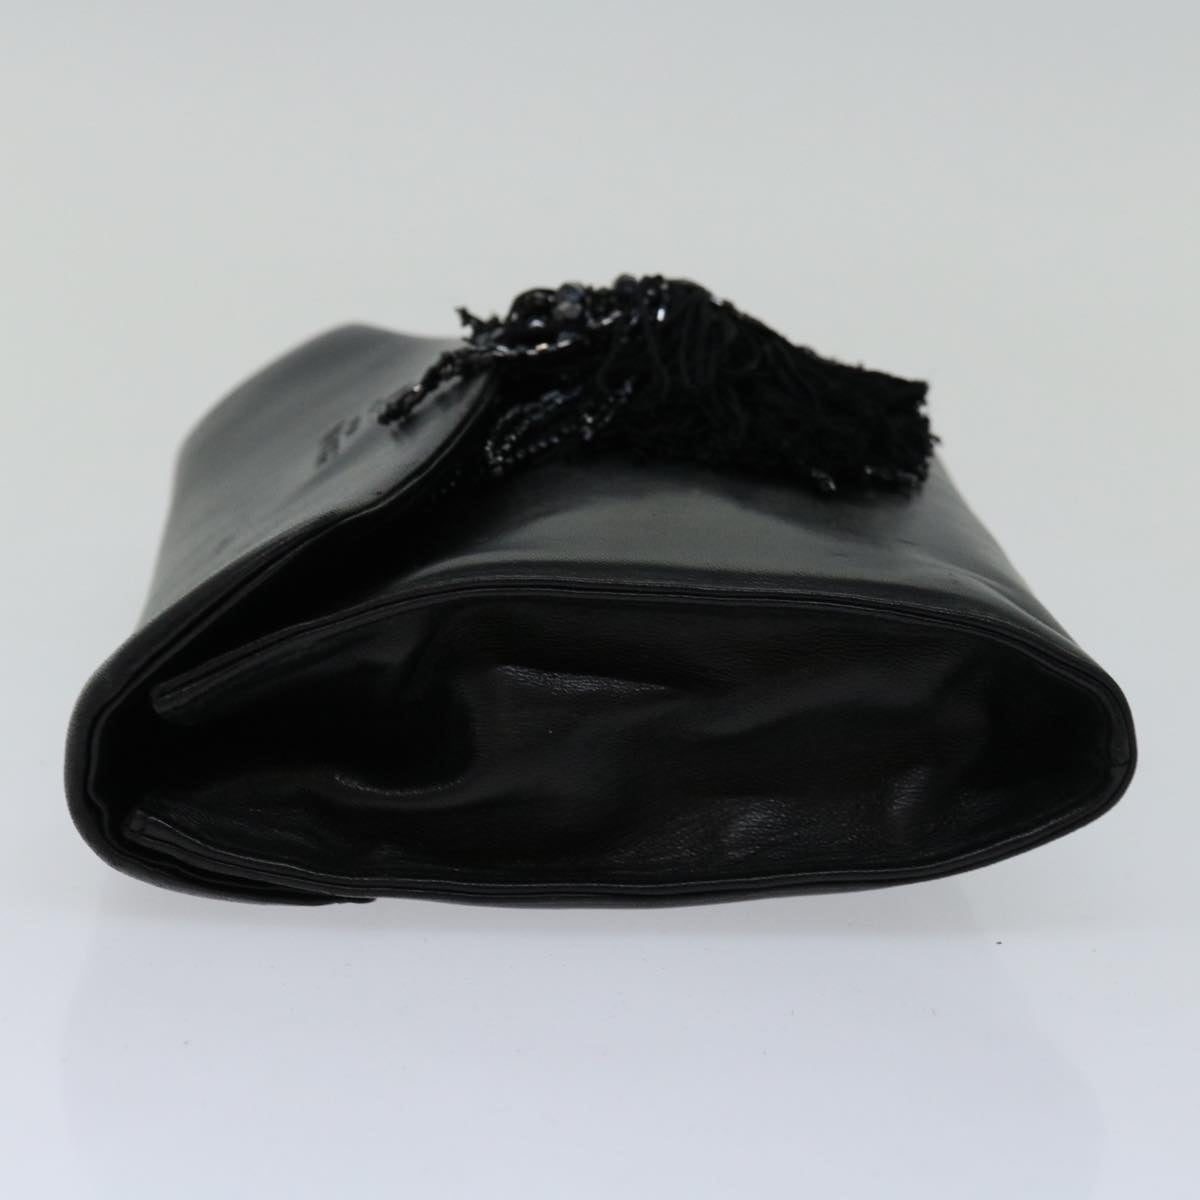 PRADA Clutch Bag Leather Black Auth bs12152